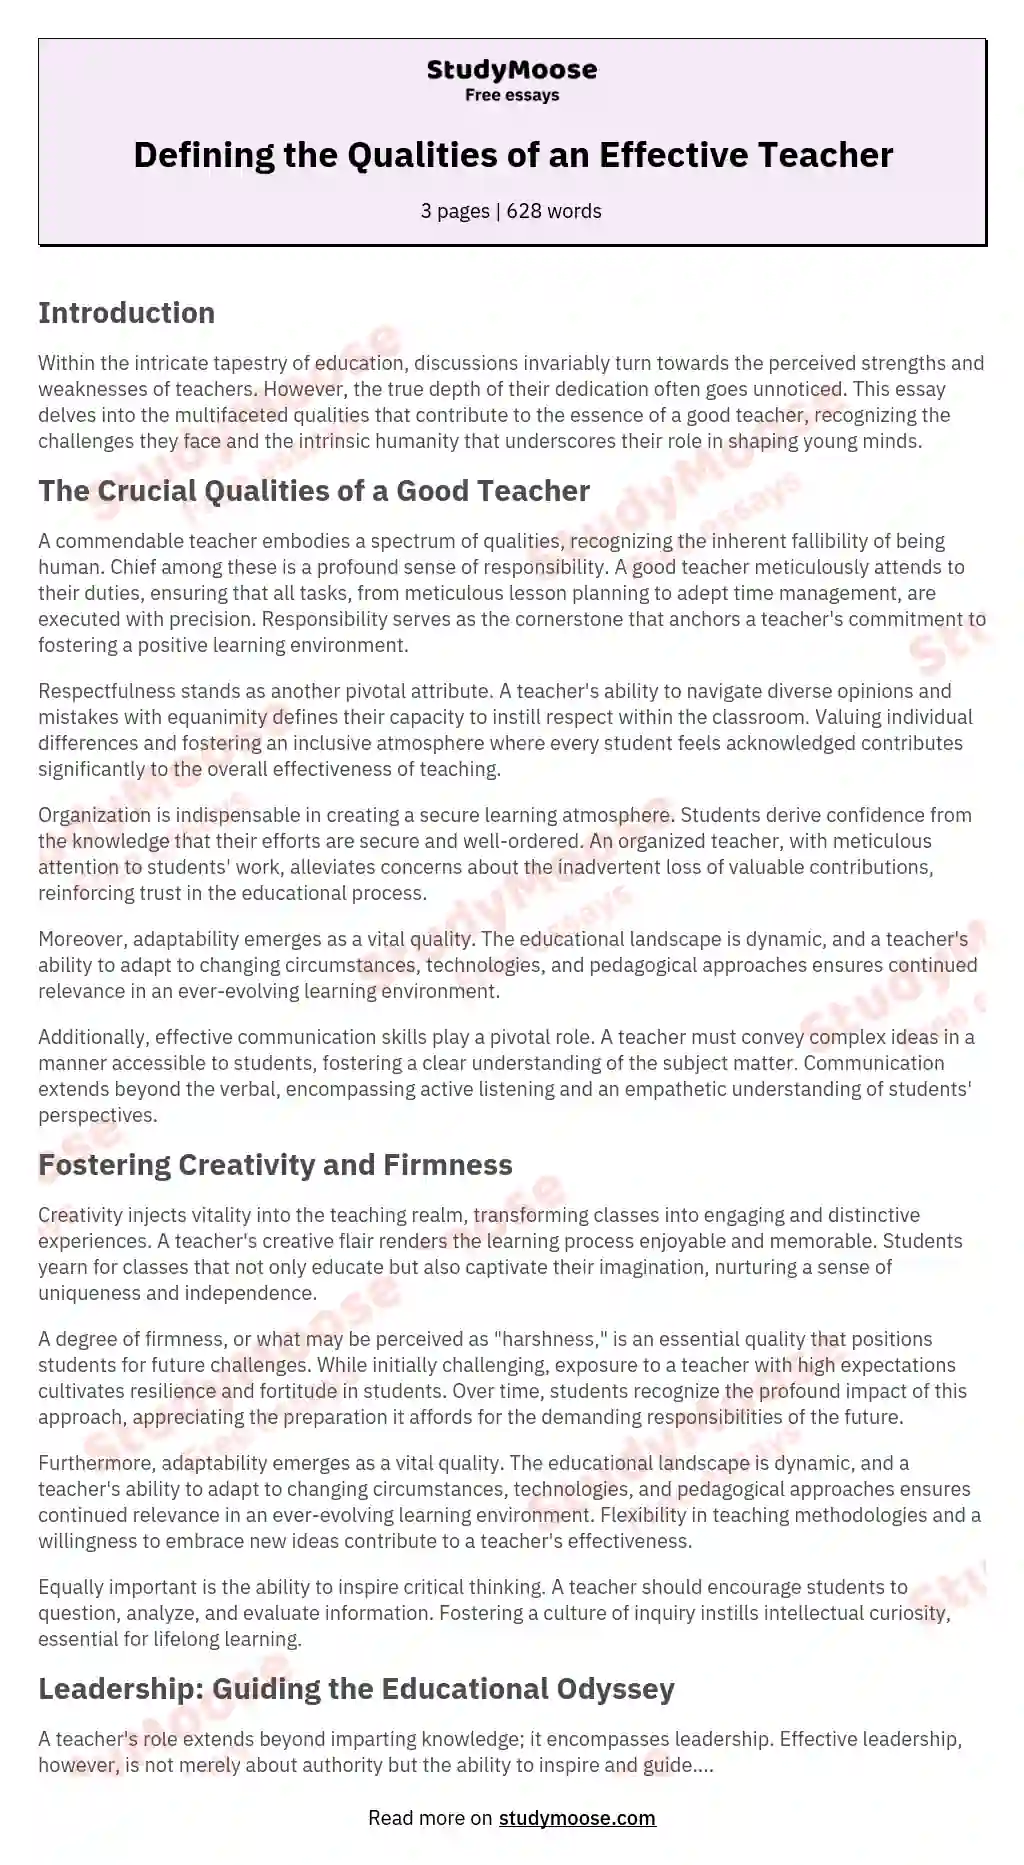 Defining the Qualities of an Effective Teacher essay